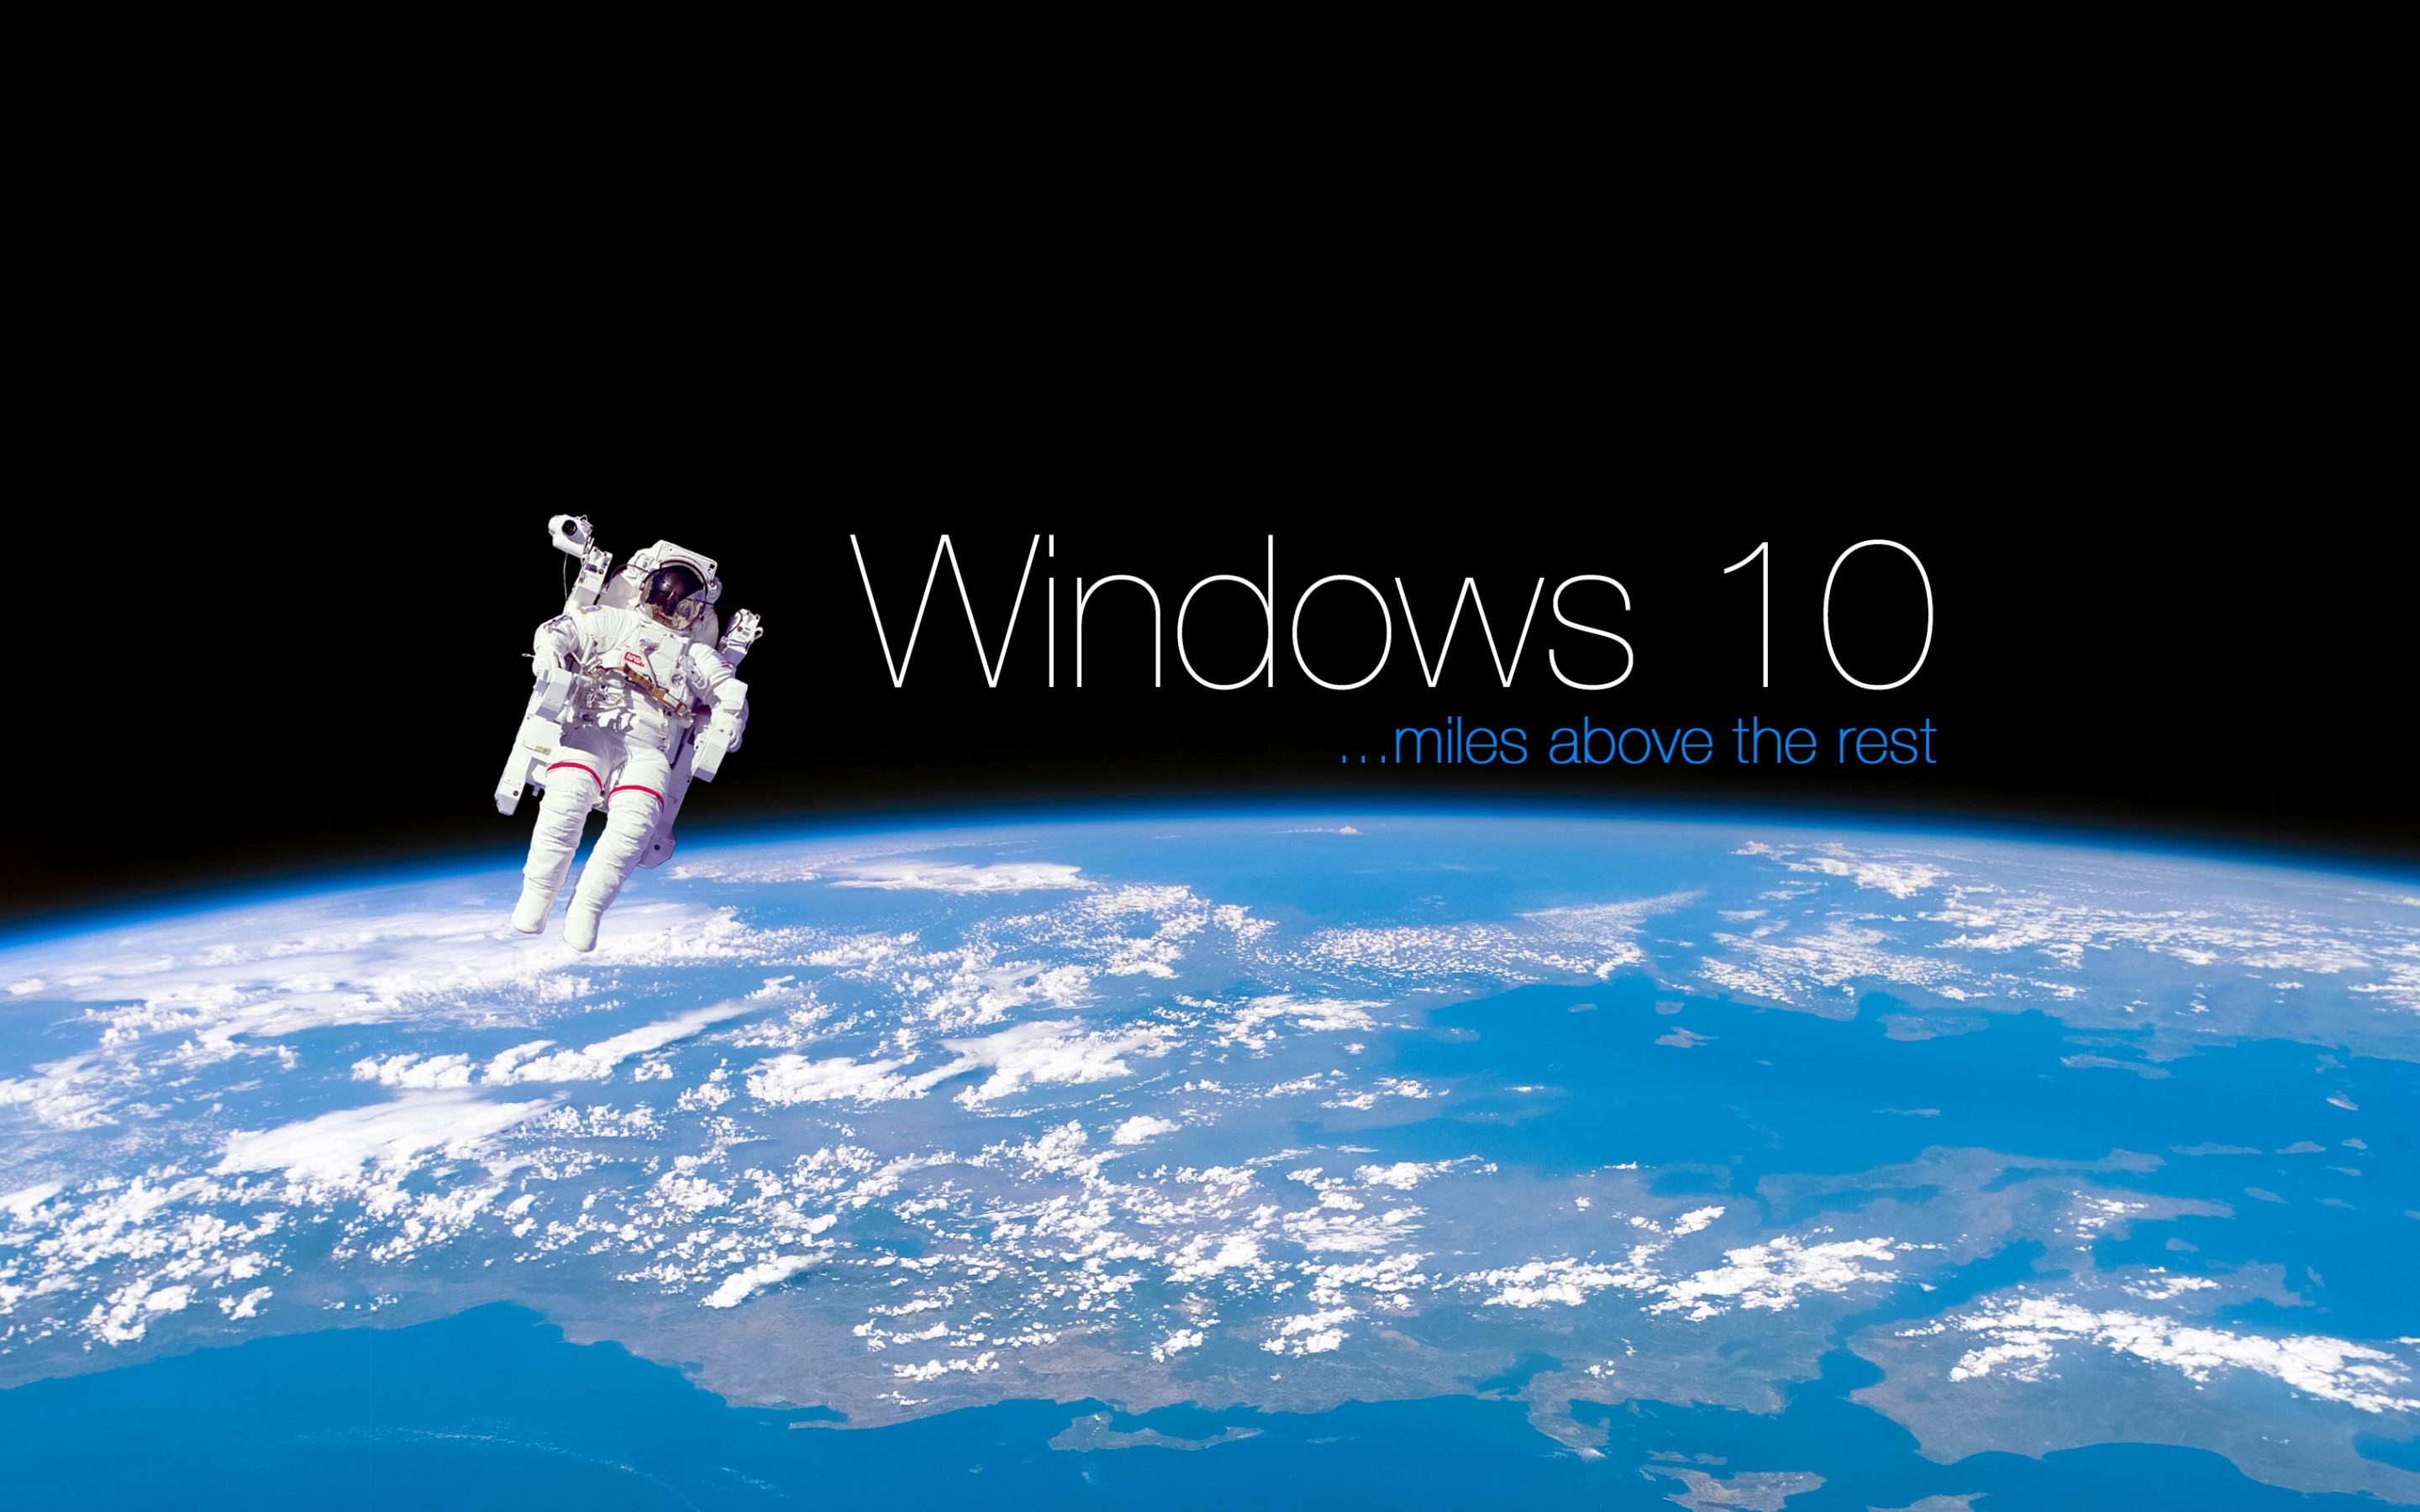 Windows 10 space 4k wallpaper 2880x1800   Wallpaper   Wallpaper Style